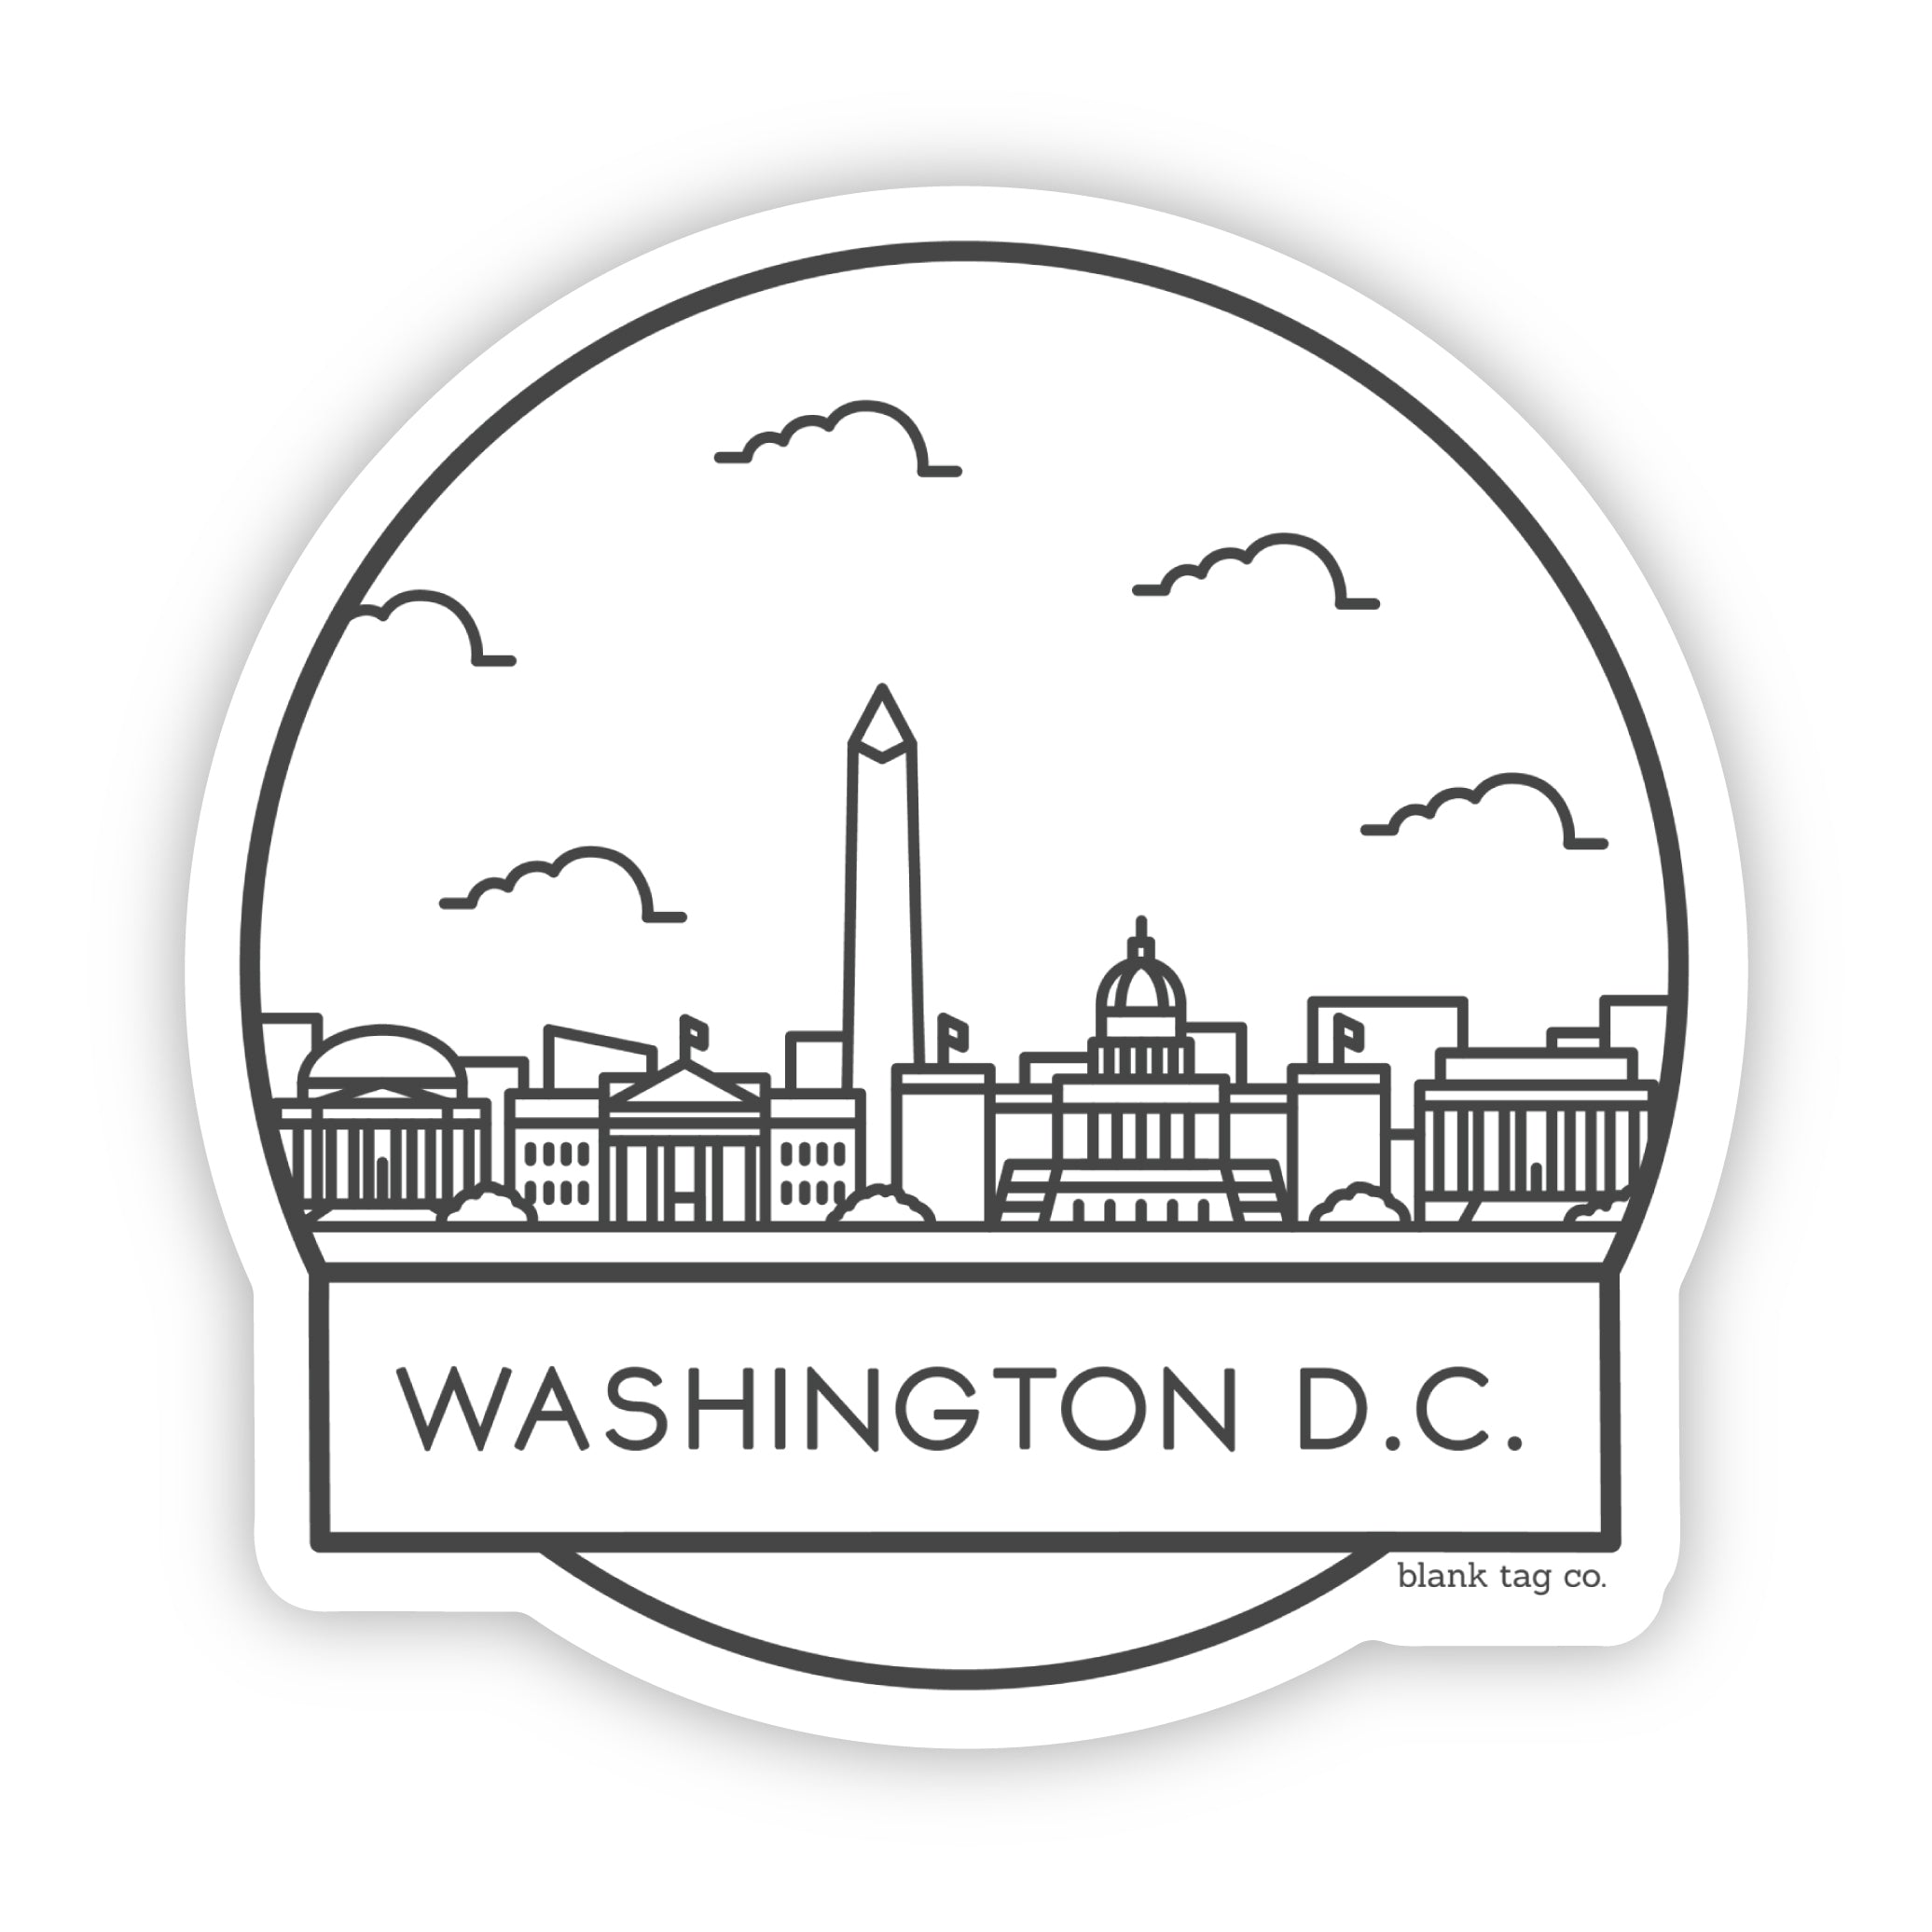 The Washington D.C. Cityscape Sticker